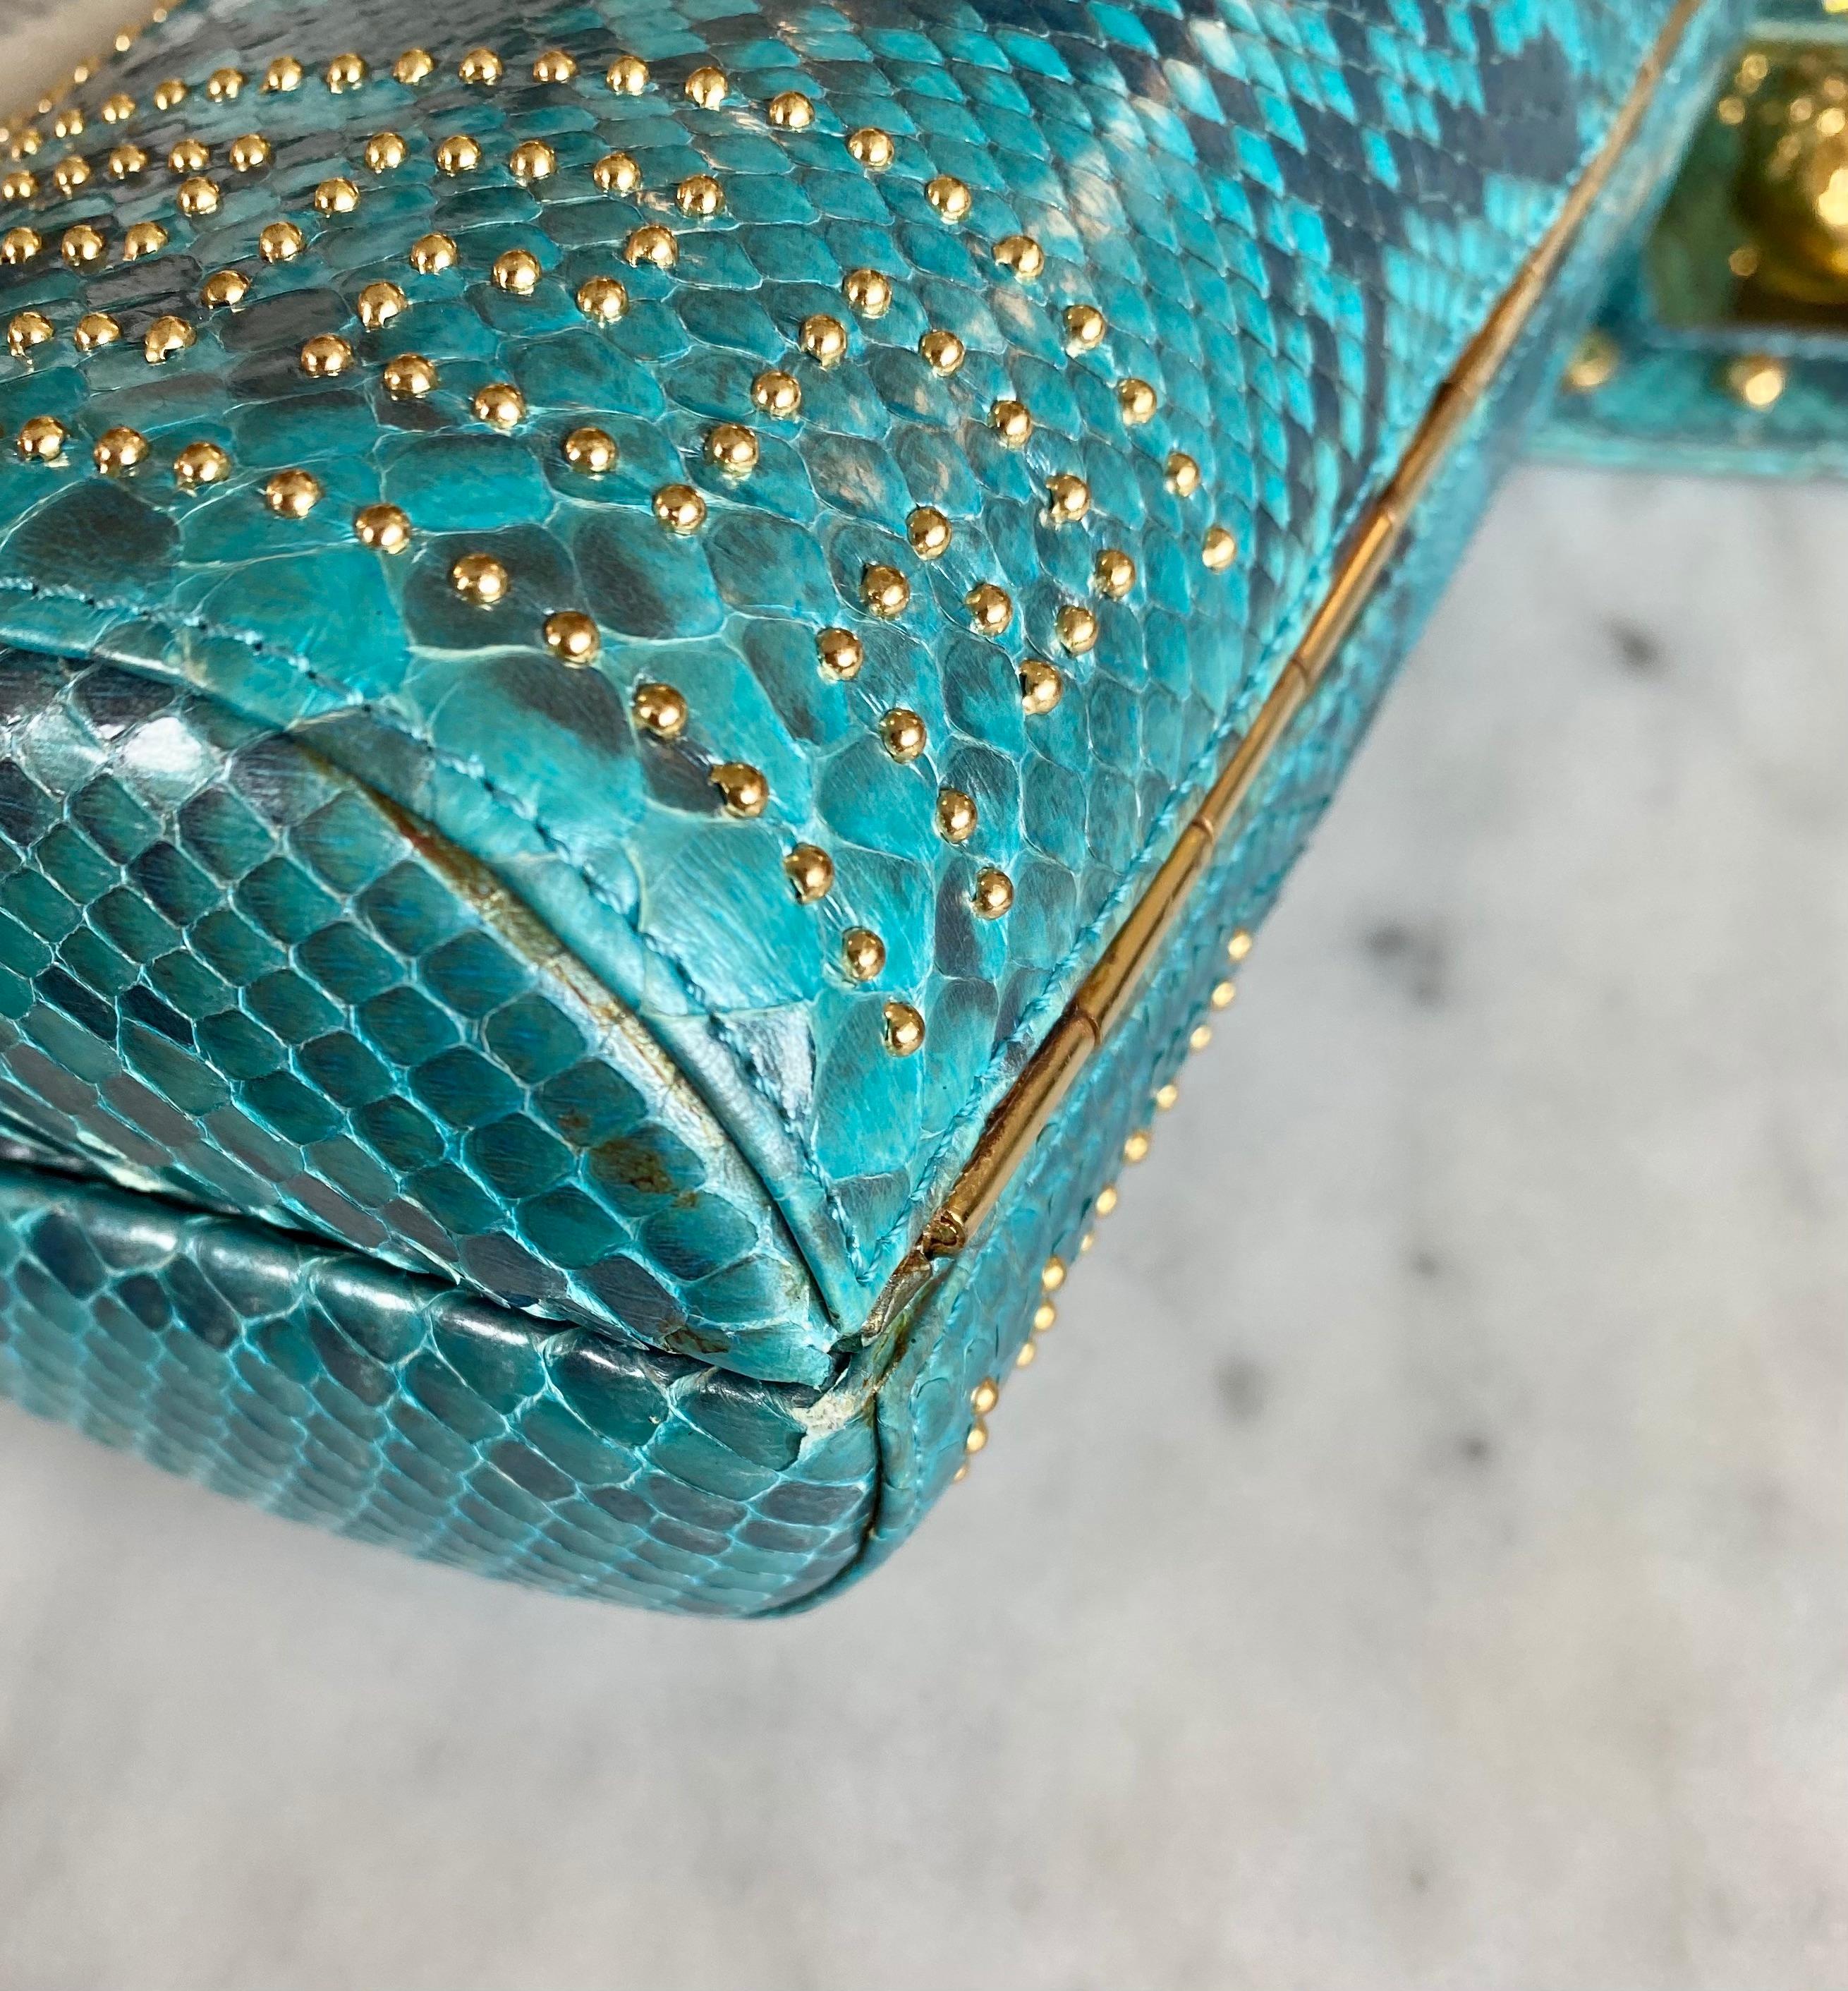 S/S 2000 Gianni Versace Python Blue Convertible Evening Bag & Clutch Donatella For Sale 8